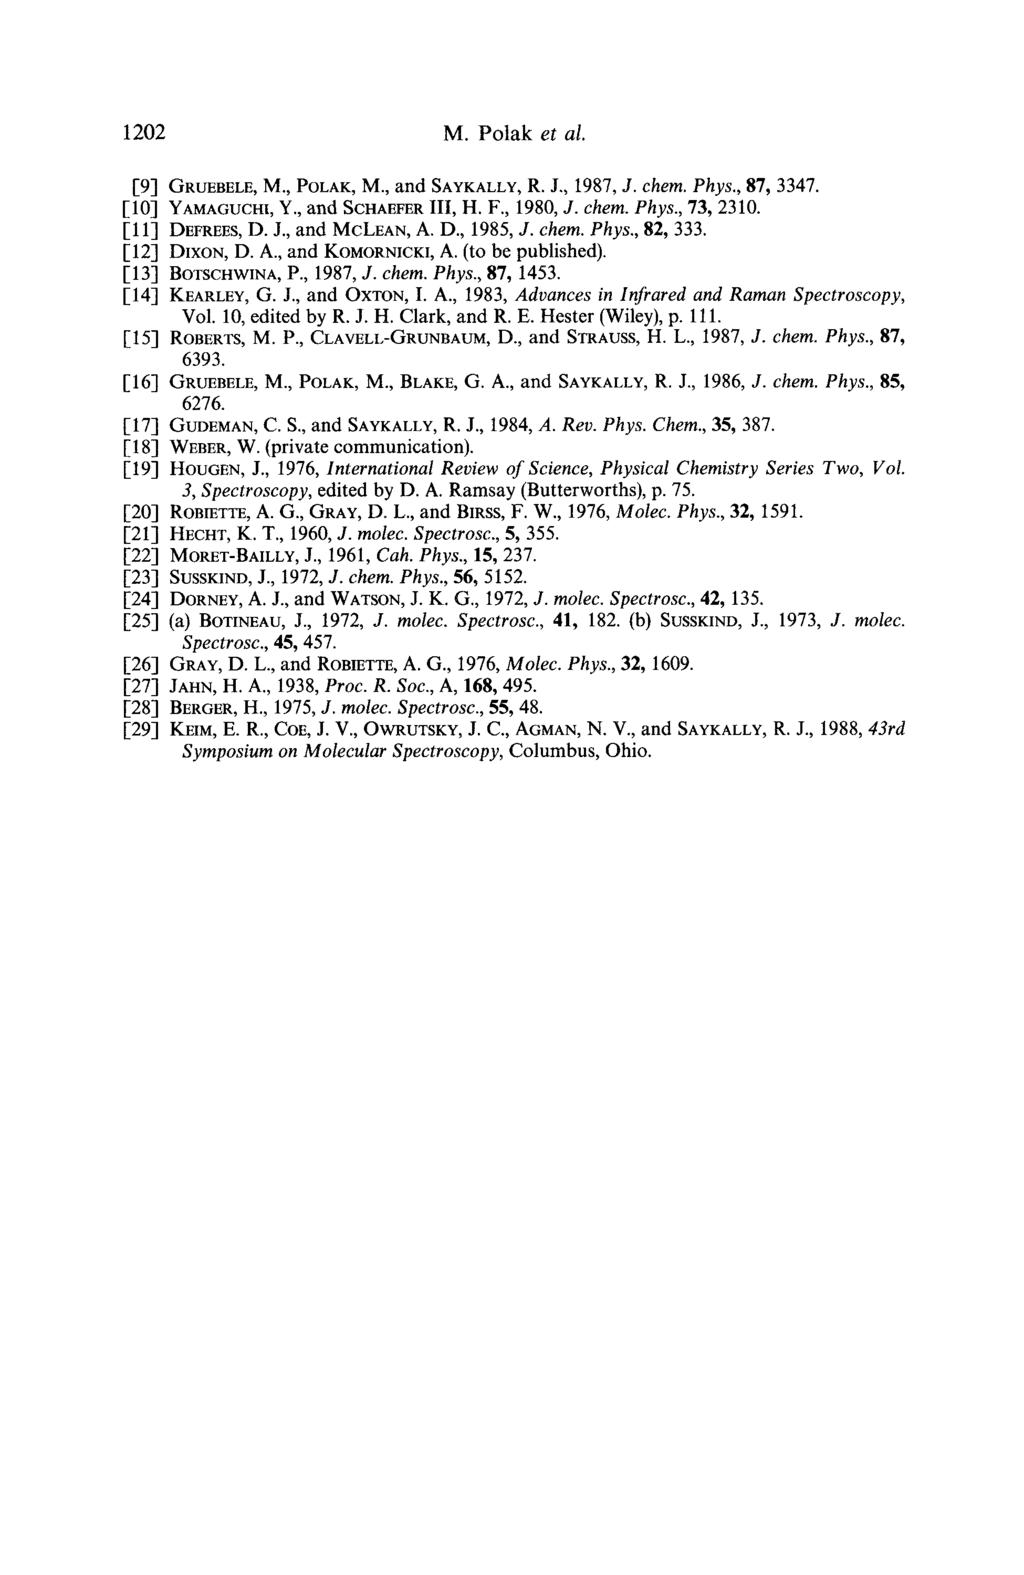 1202 M. Polak et al. I-9] GRUEBELE, M., POLAK, M., and SAYKALLY, R. J., 1987, J. chem. Phys., 87, 3347. [10] YAMAGUCHI, Y., and SCHAEFER III, H. F., 1980, J. chem. Phys., 73, 2310. [11] DEFREES, D. J., and MCLEAN, A.